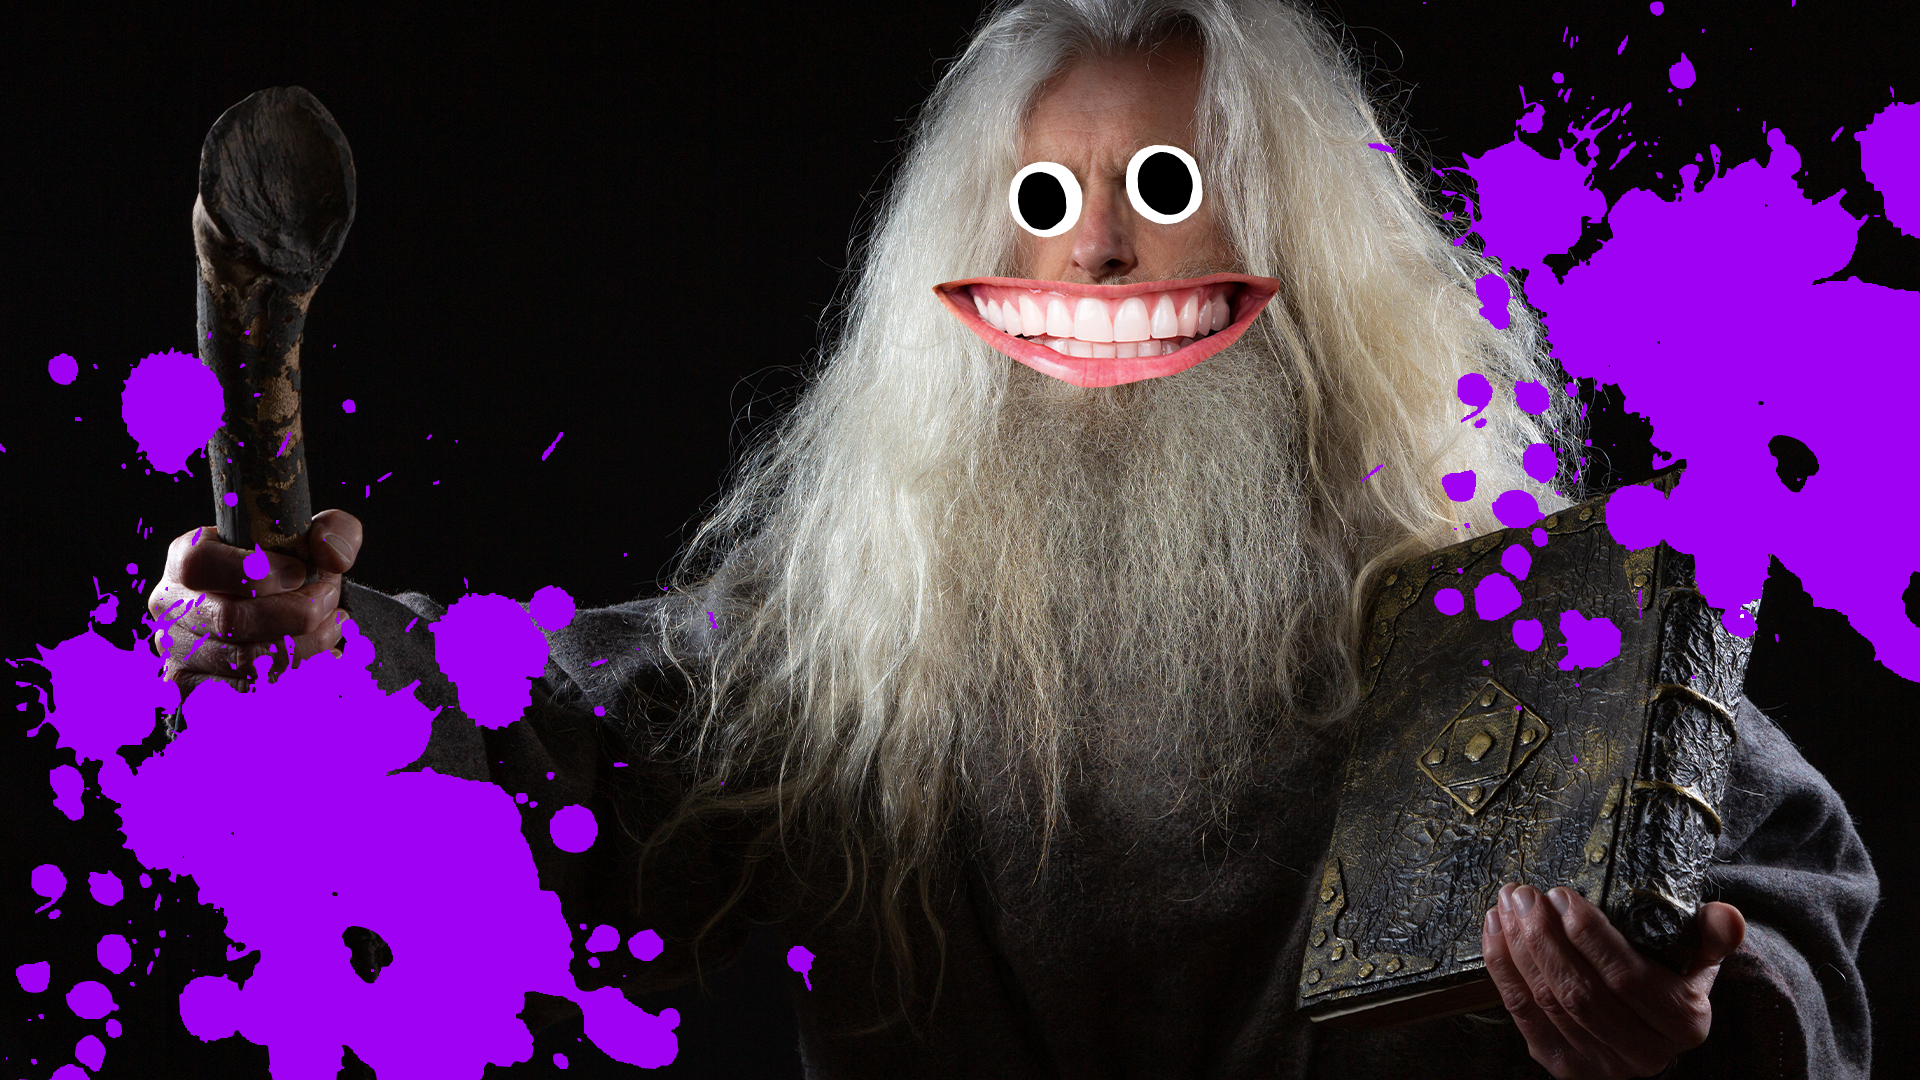 Crazy looking wizard with purple splats